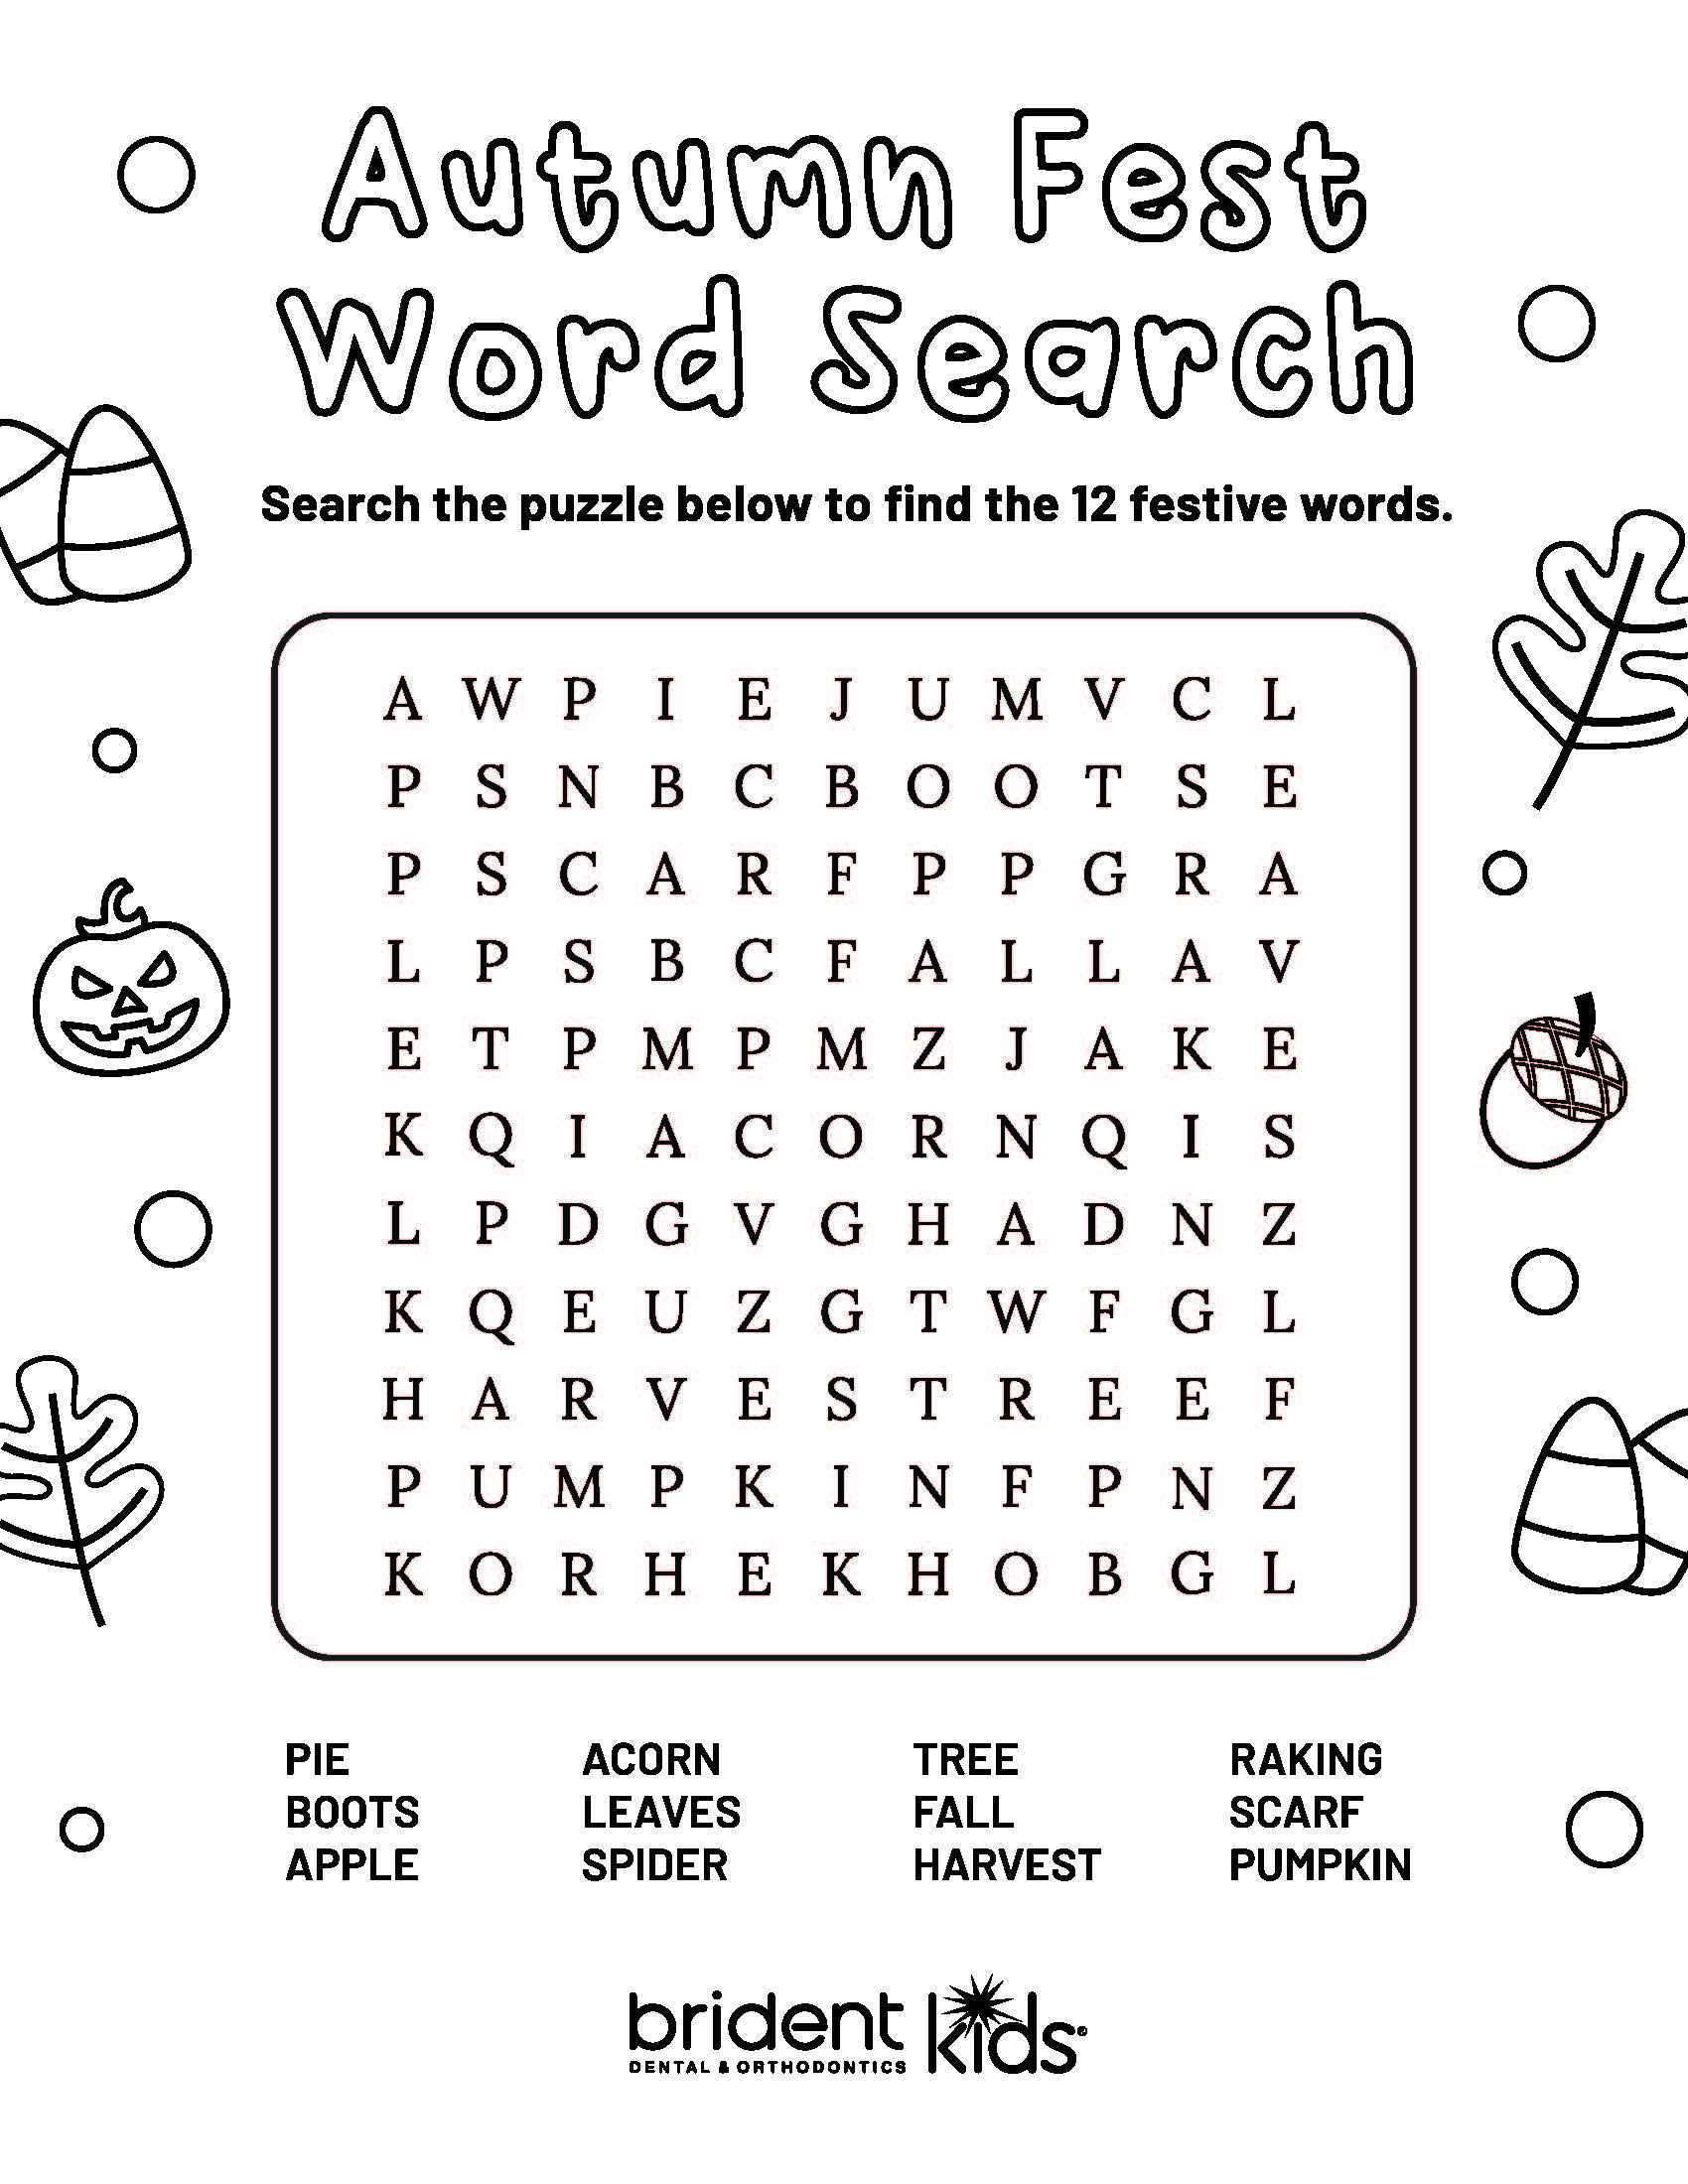 Brident Dental Kid's - Word Search